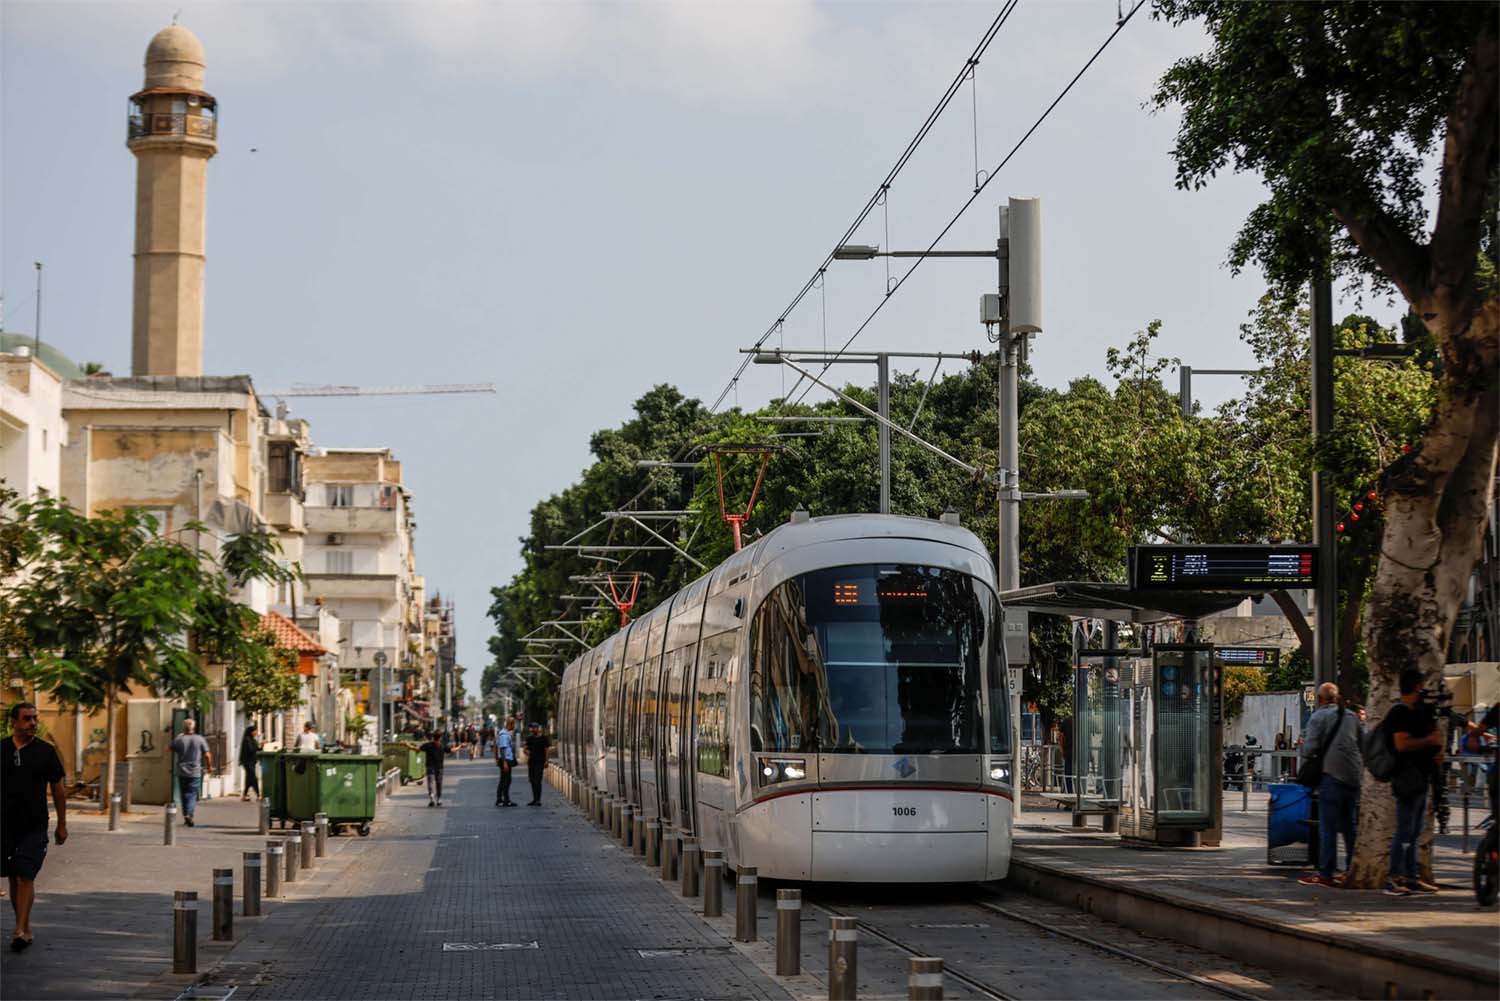 A tram from Israel's new light rail line for the Tel Aviv metropolitan area